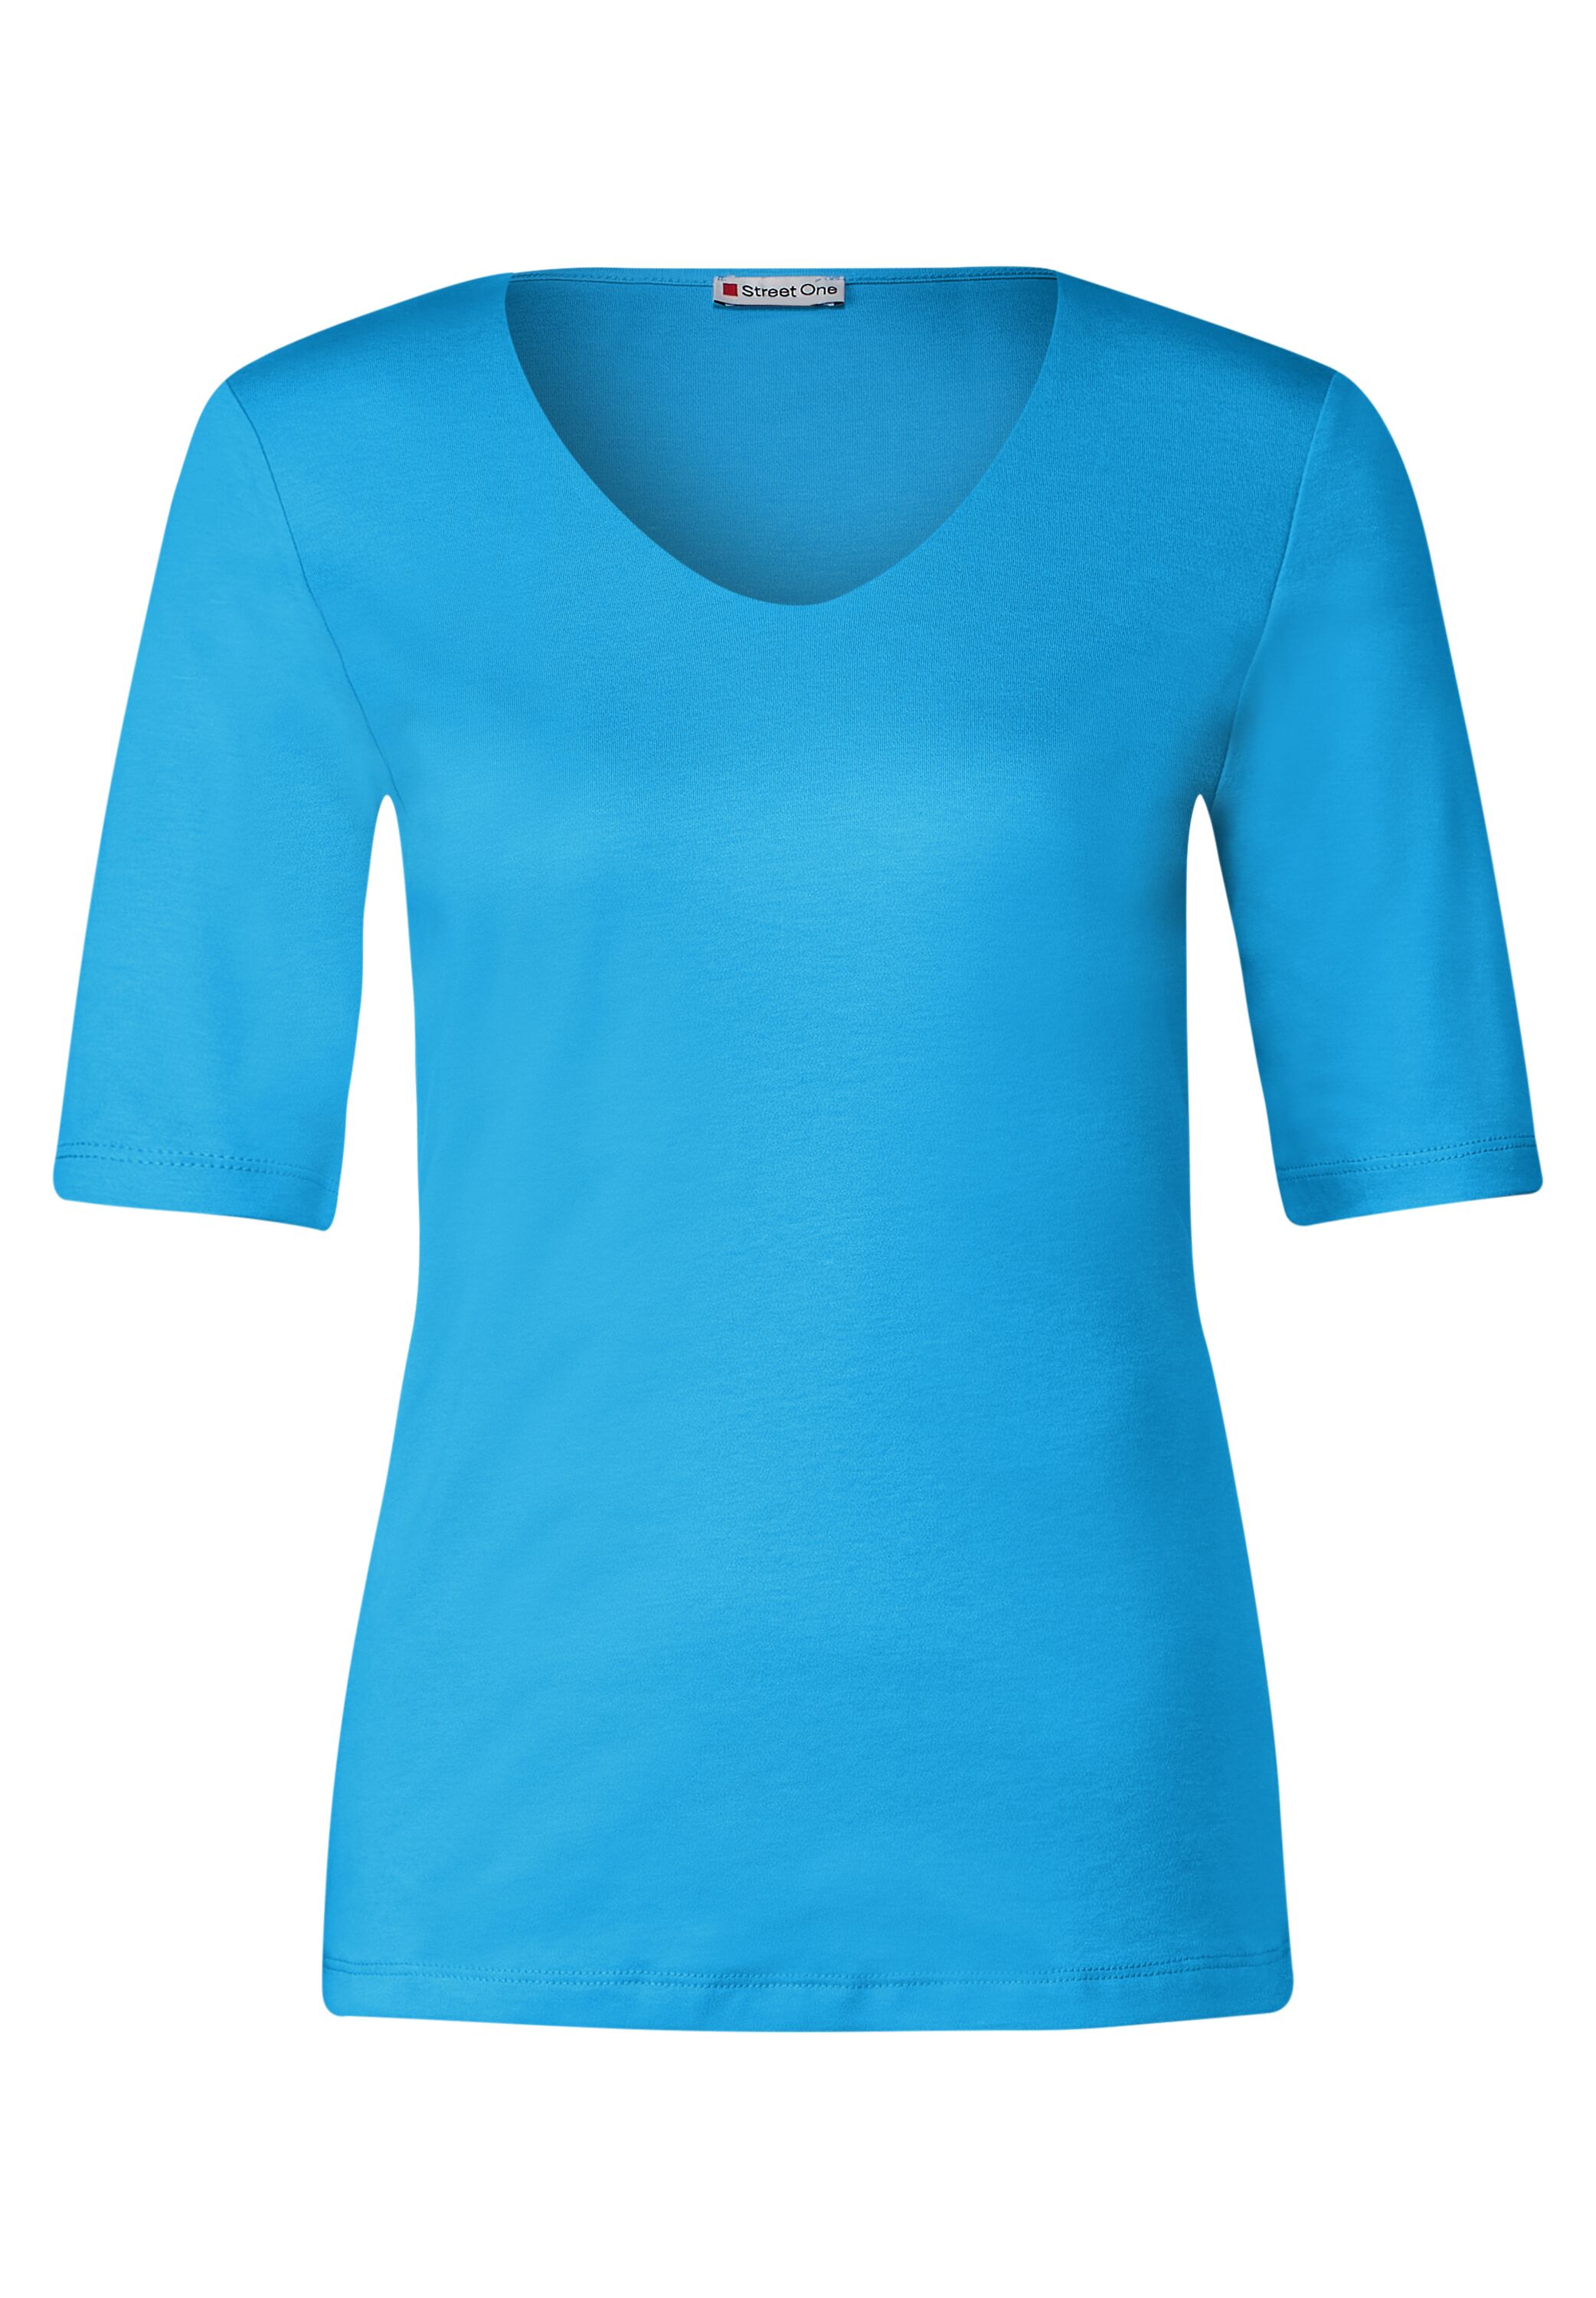 | T-Shirt Unifarbe Street Street One 38 splash in One blue |